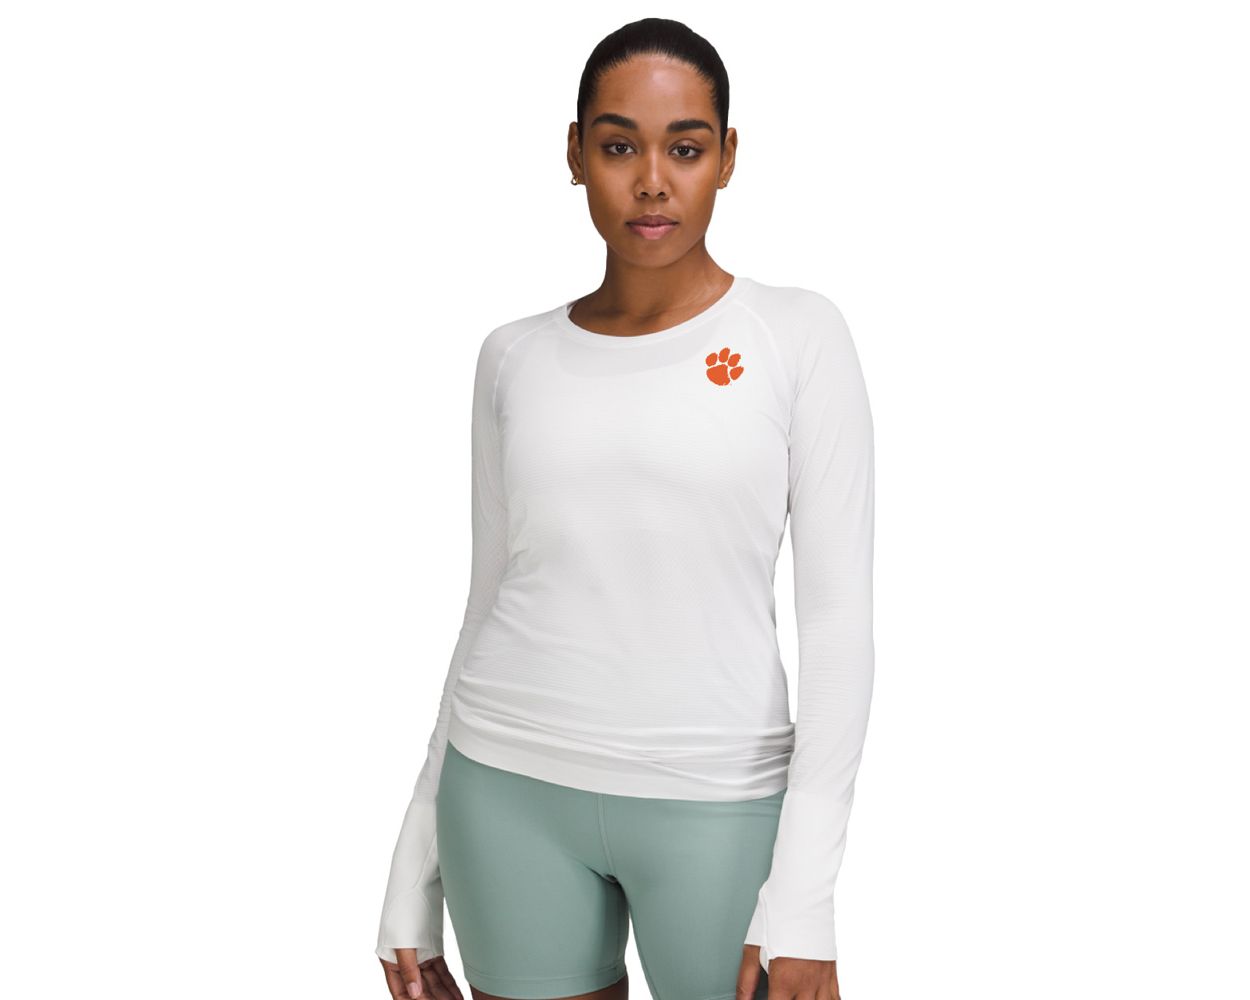 Clemson lululemon Women's Swiftly Tech Long Sleeve Shirt 2.0